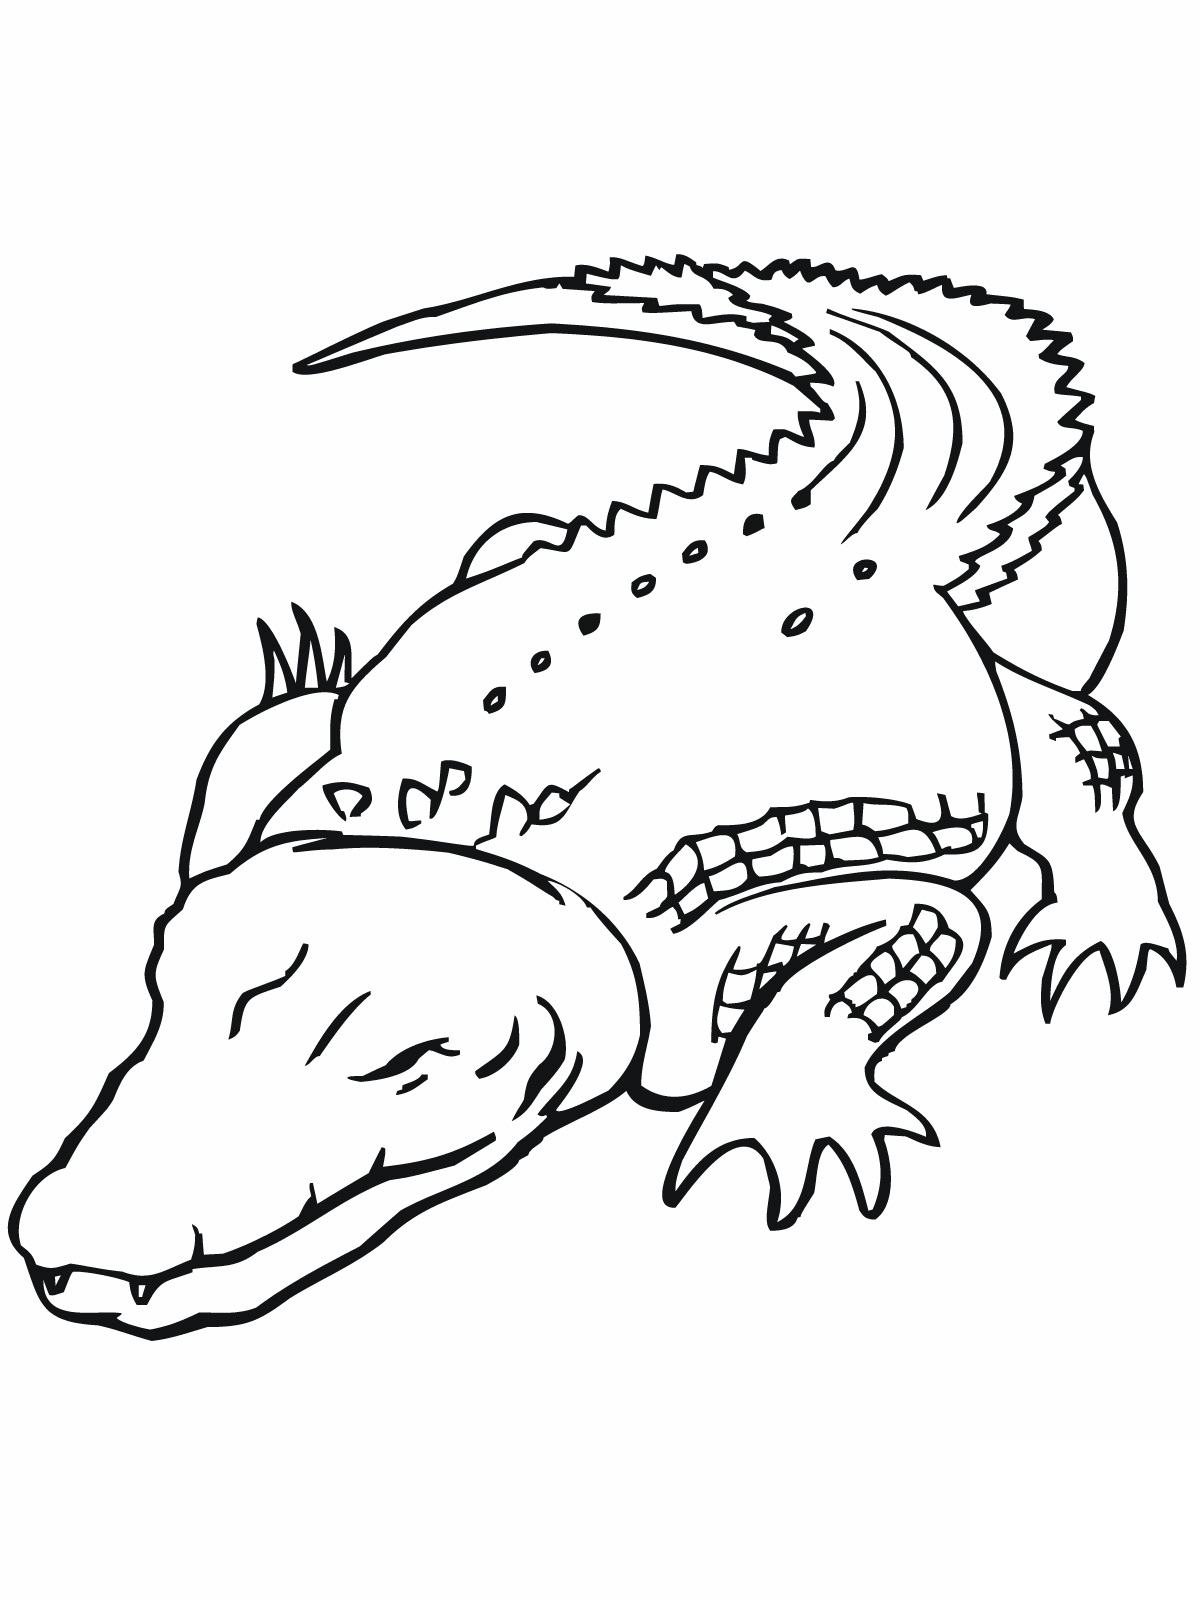 uf gators coloring pages - photo #49